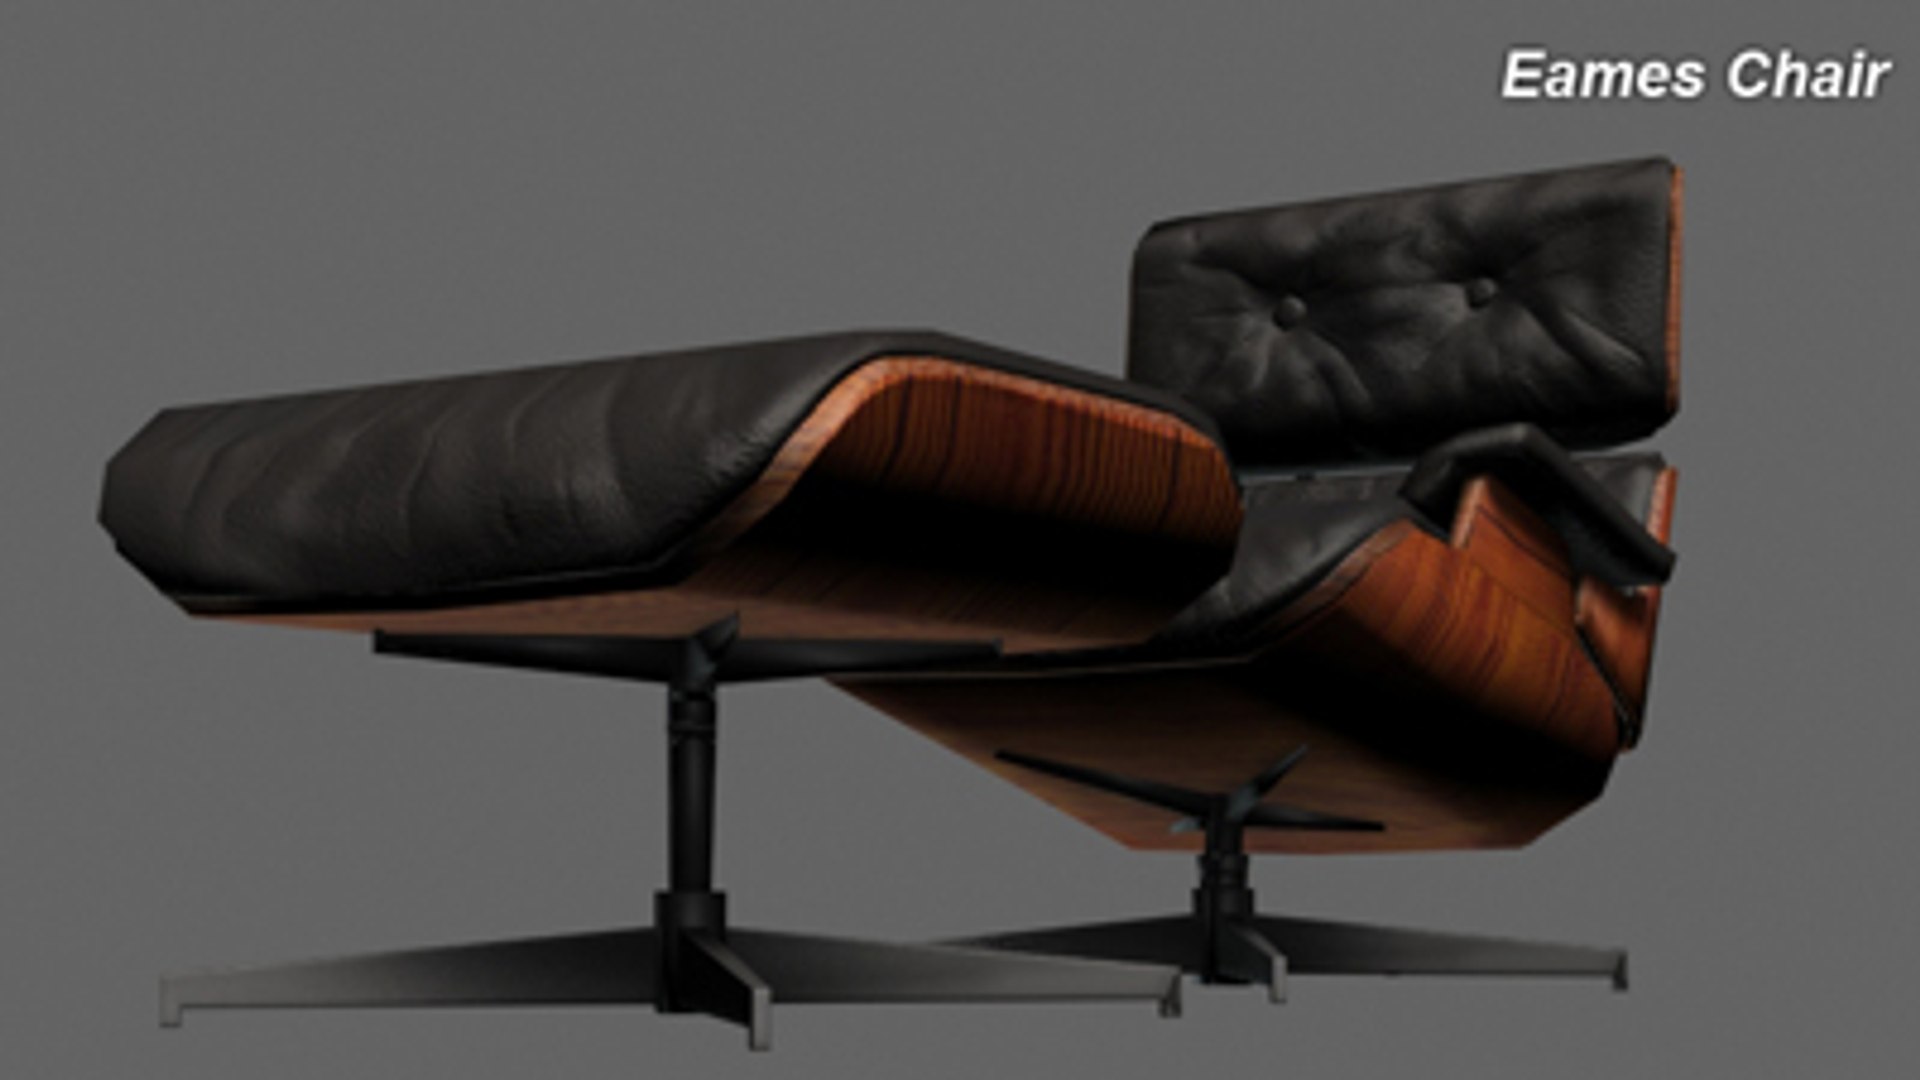 3d Model Eames Chair